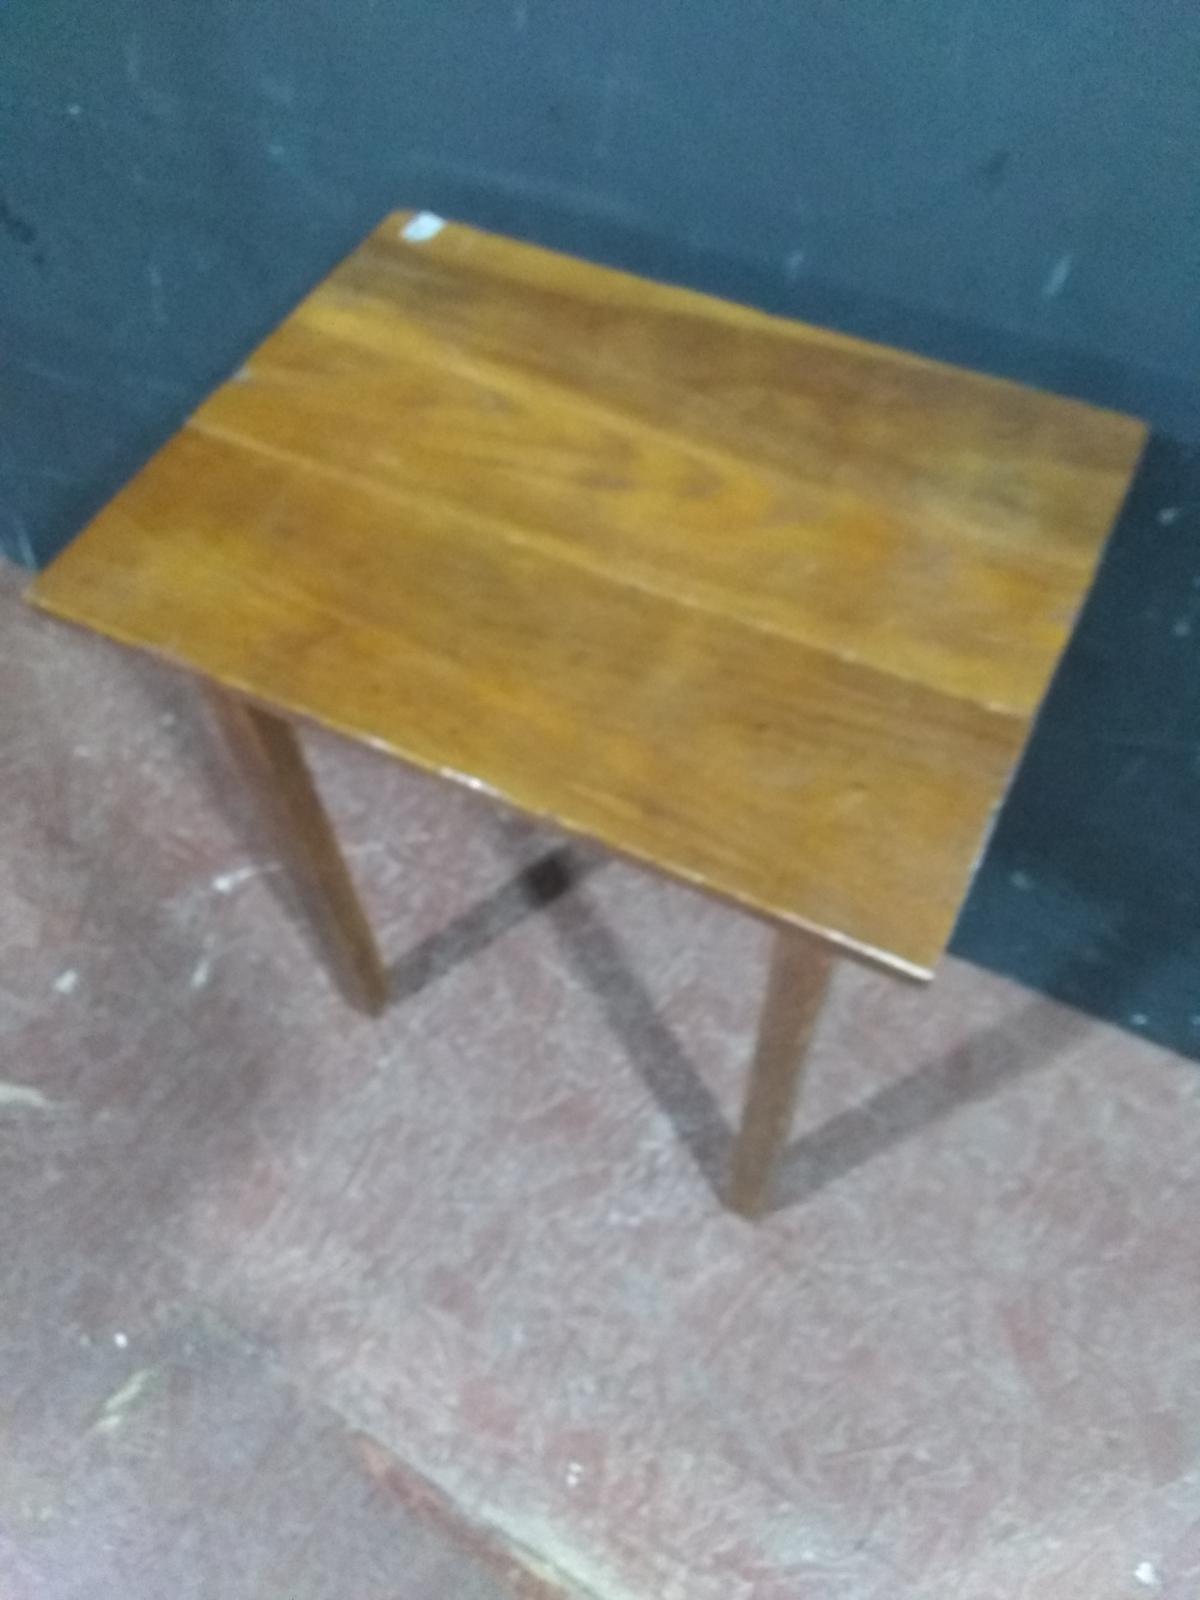 Vintage Three Board Top Pine Side Table